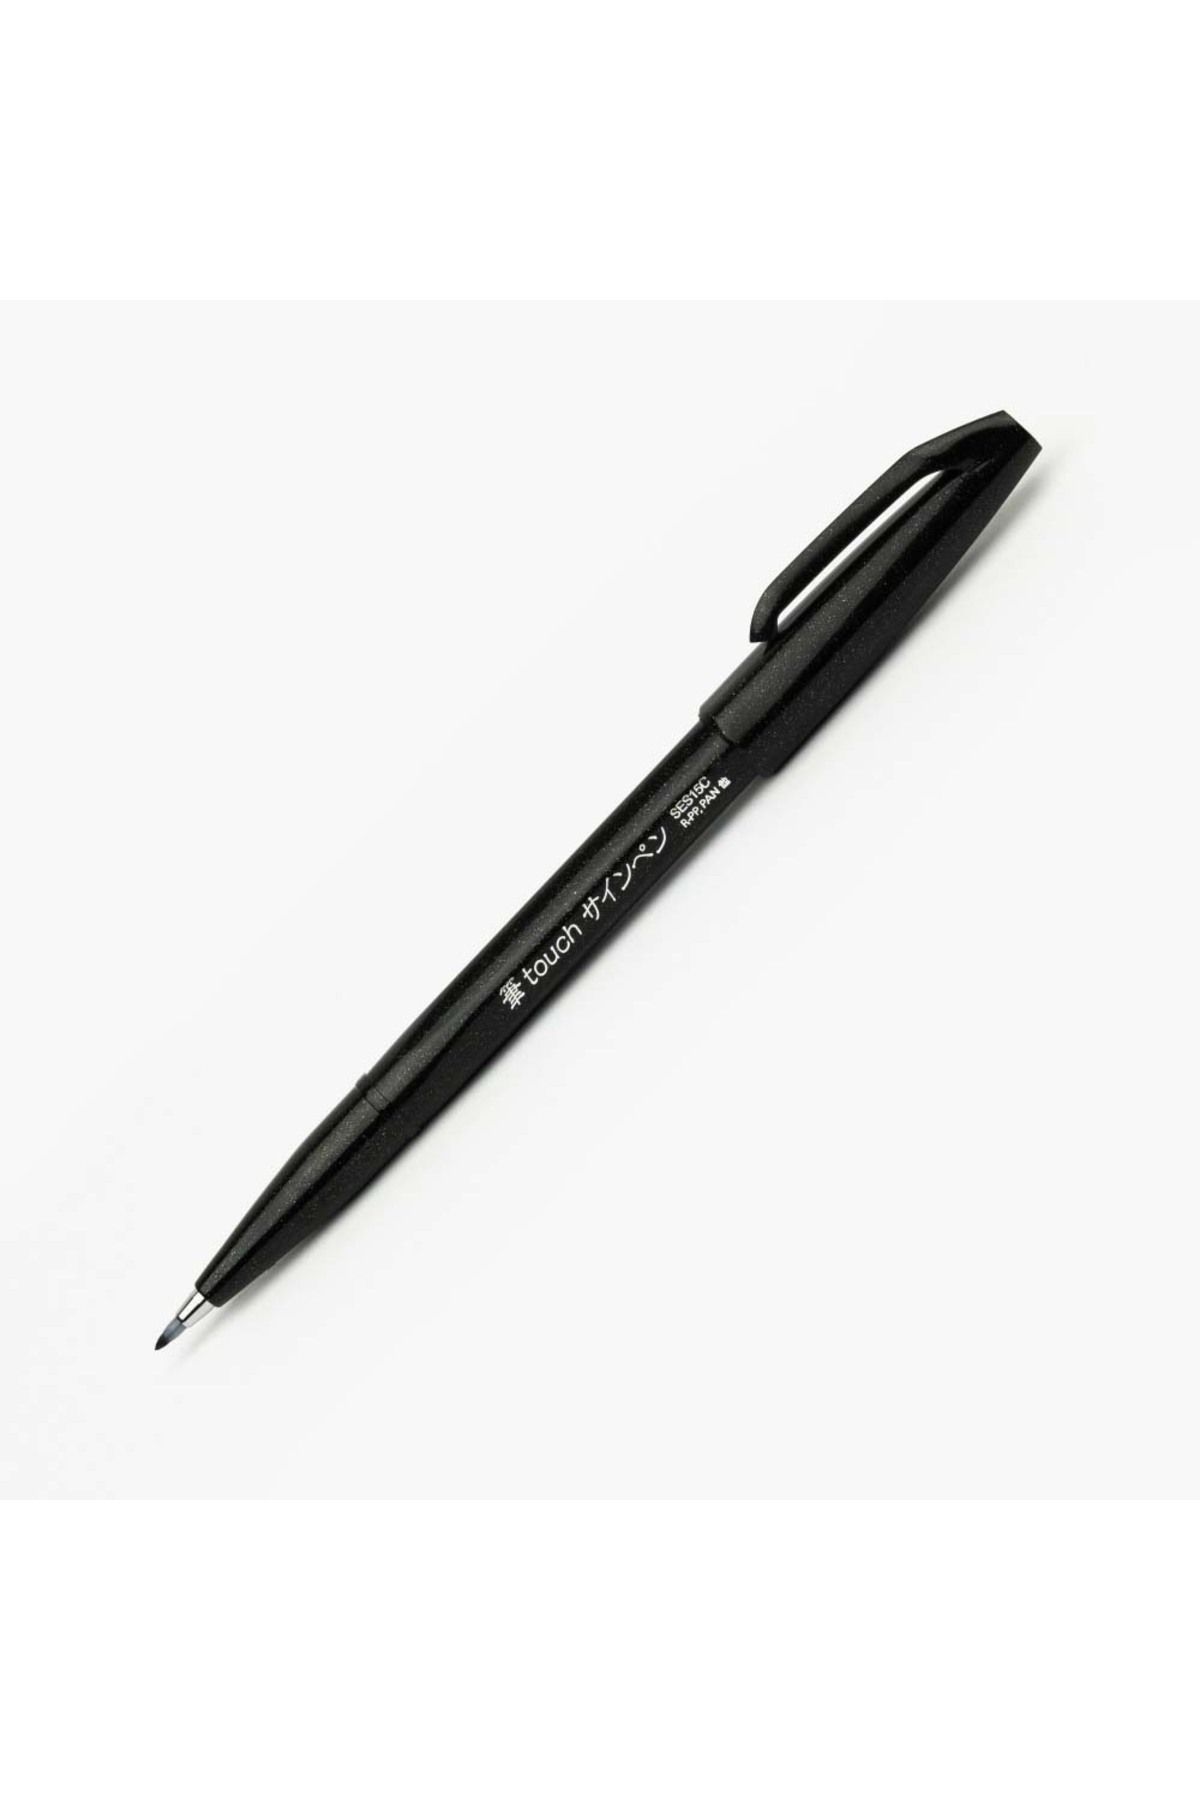 Pentel Brush Sign Pen Black